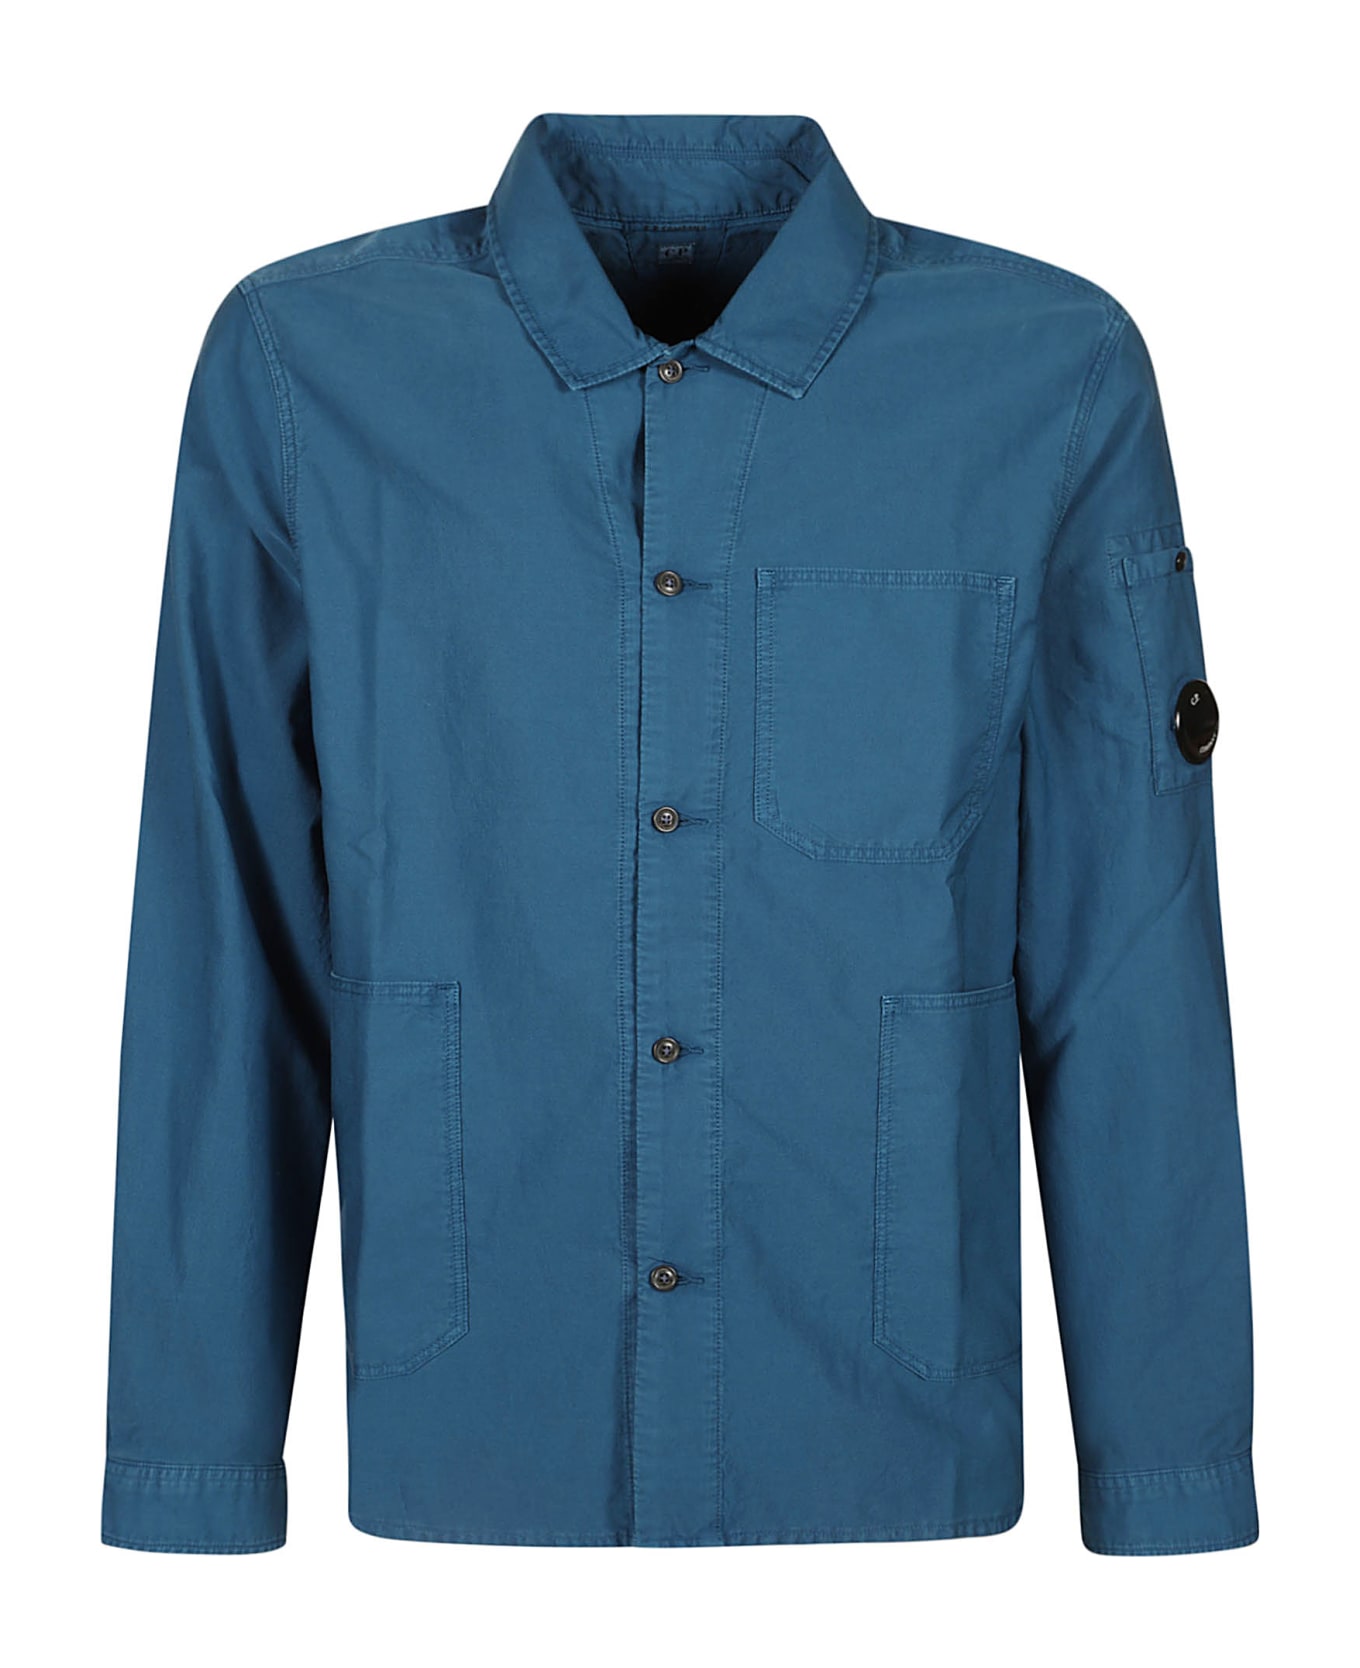 C.P. Company Ottoman Long-sleeved Shirt - INK BLUE シャツ